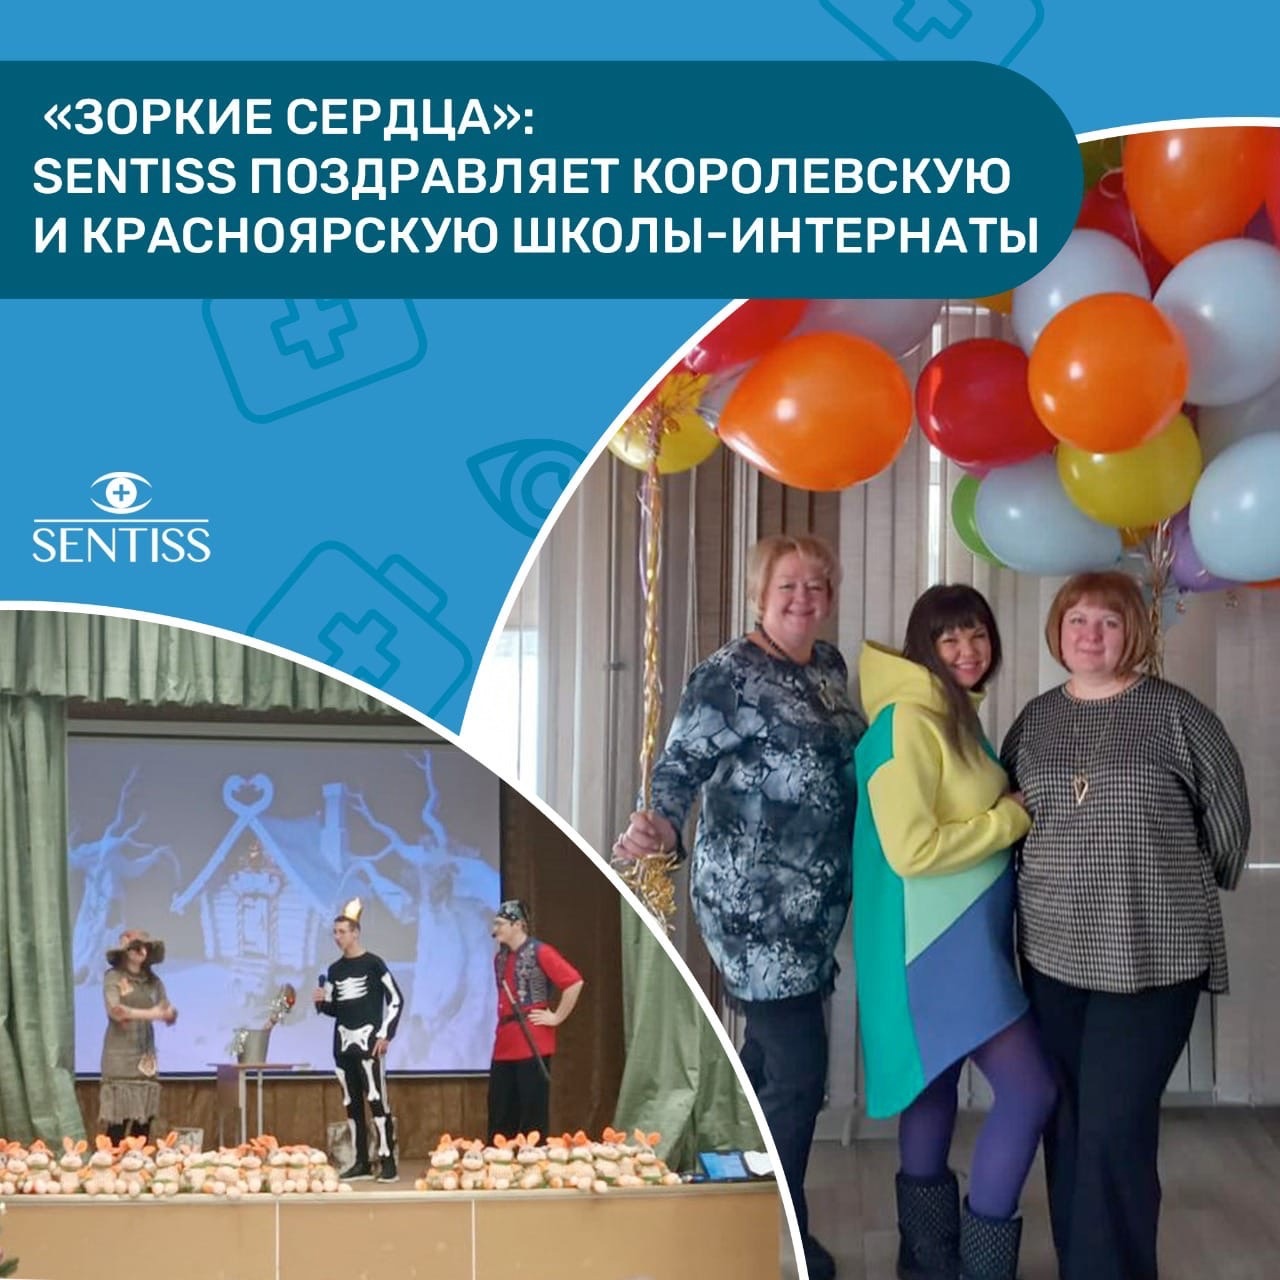 Sentiss поздравляет королёвскую и красноярскую школы-интернаты